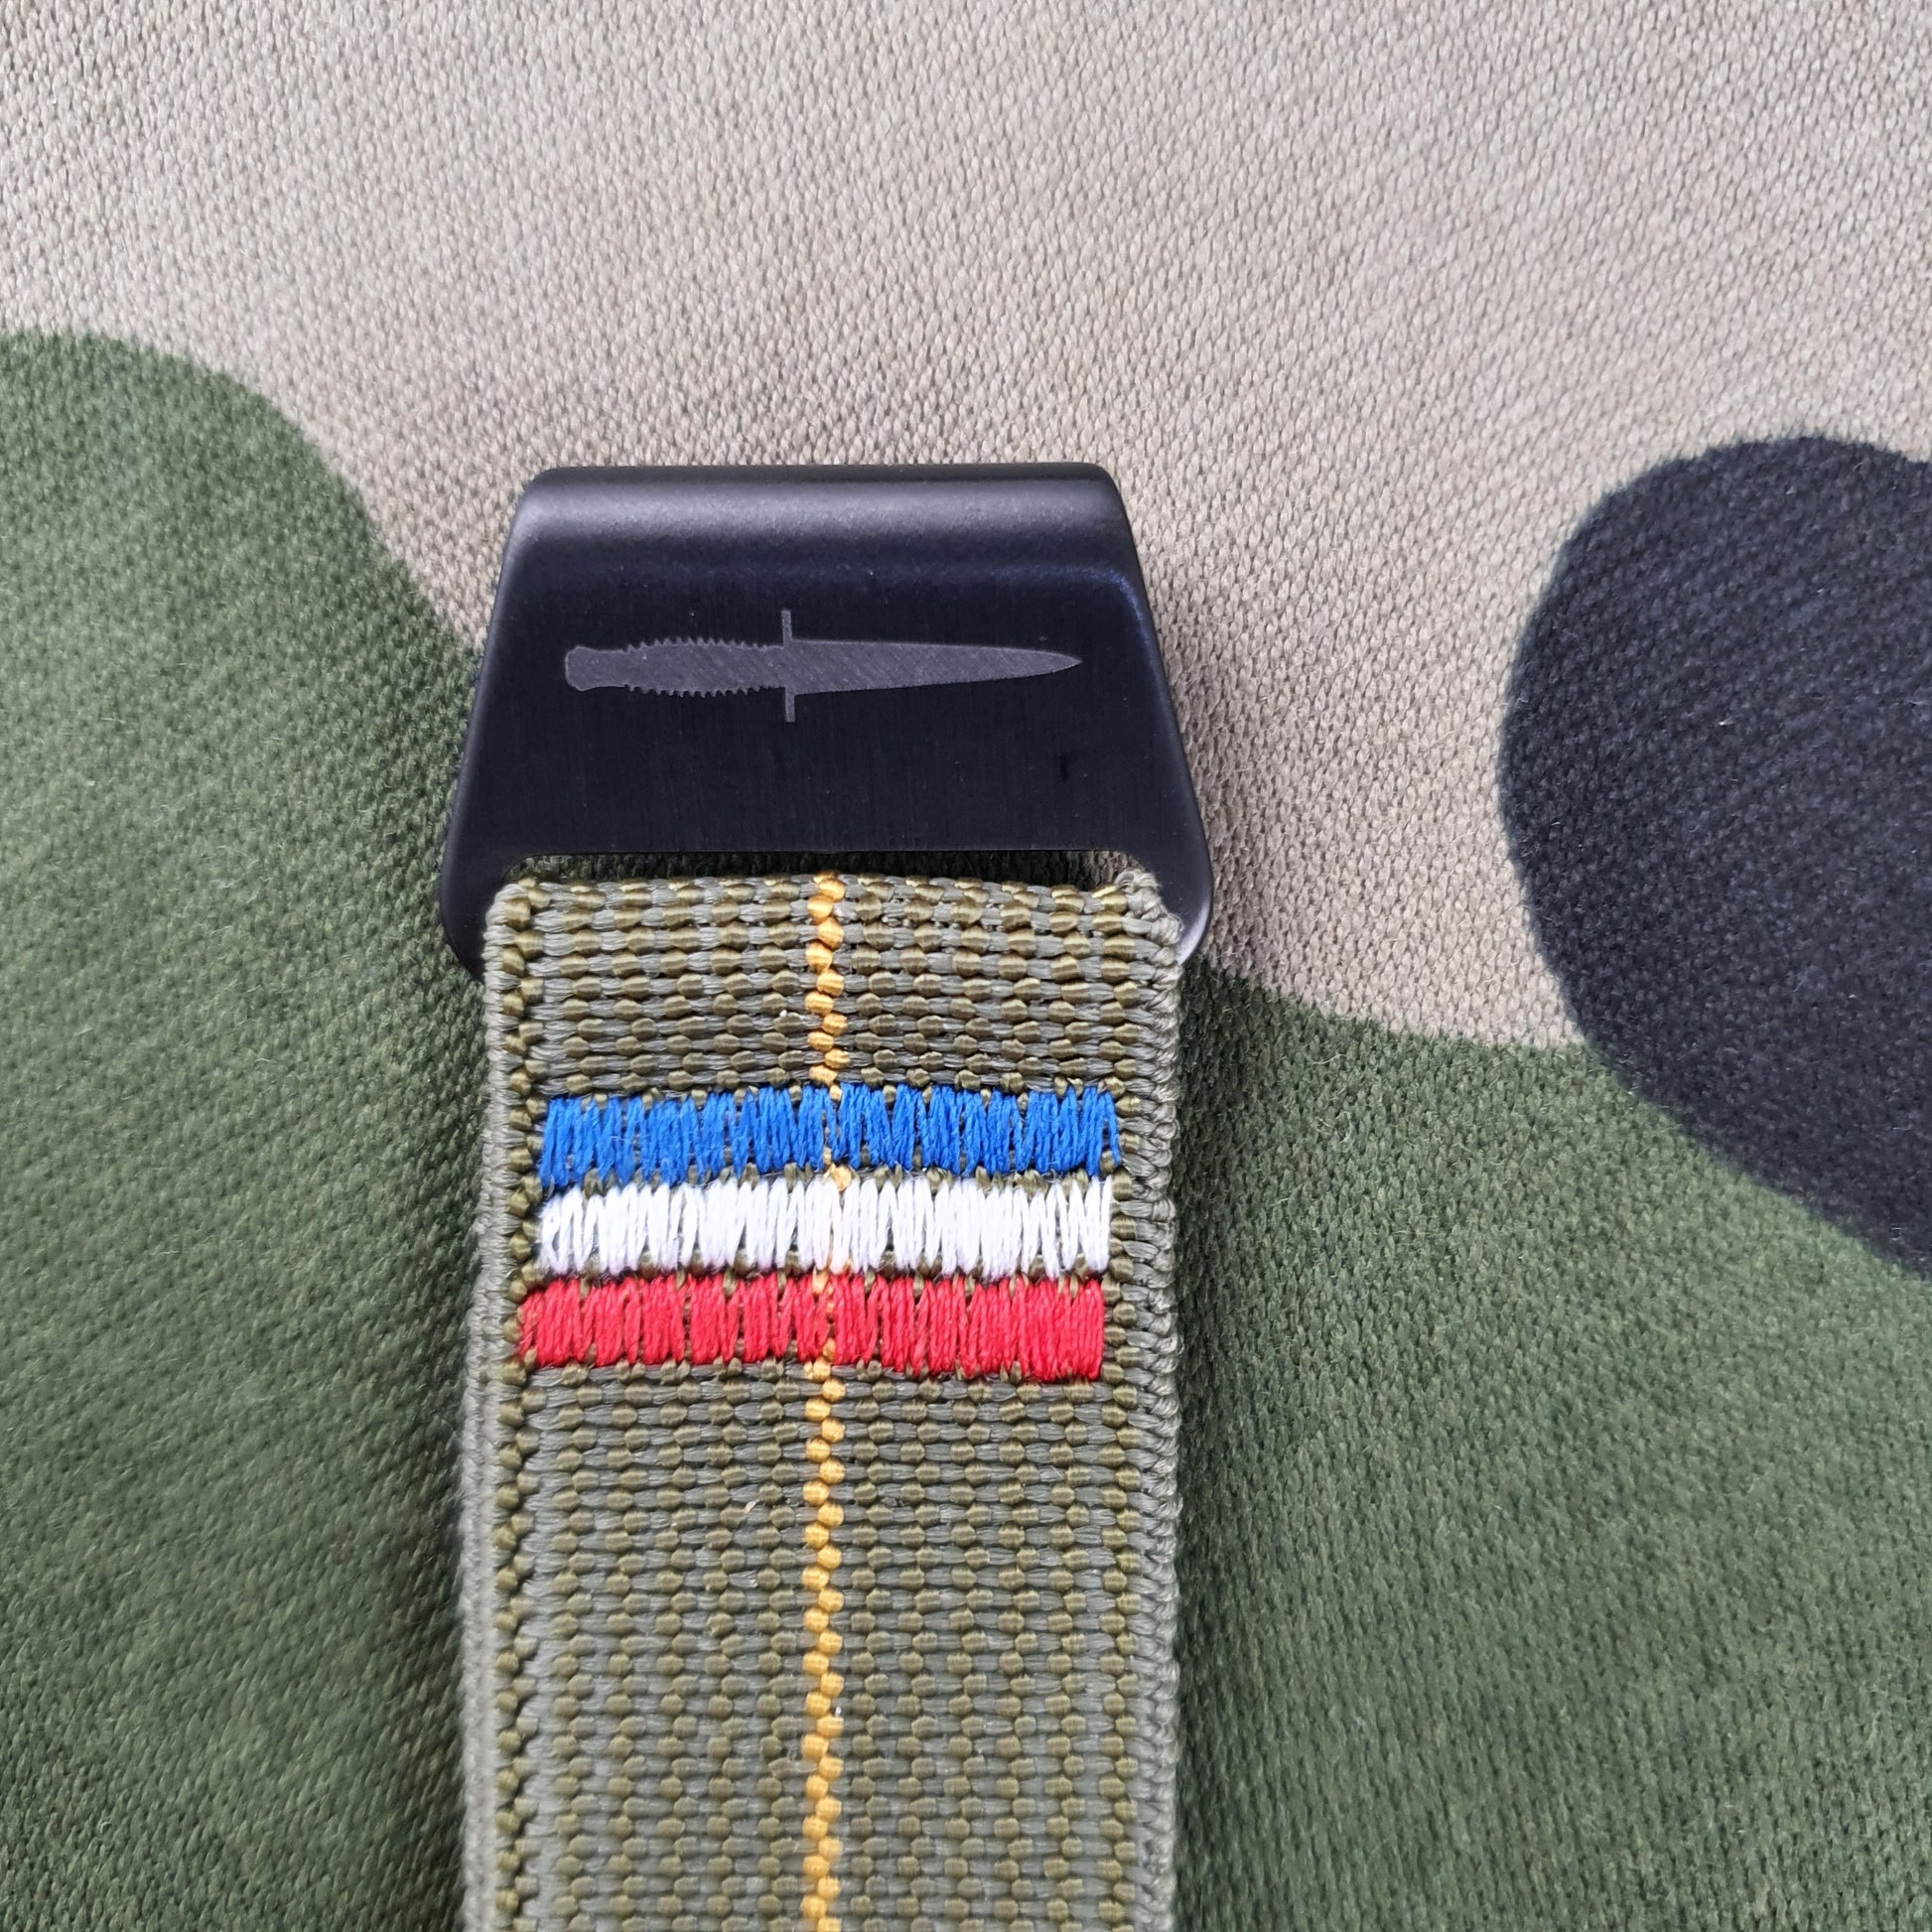 Original NDC strap - with Jumbo stitch - NDC Straps